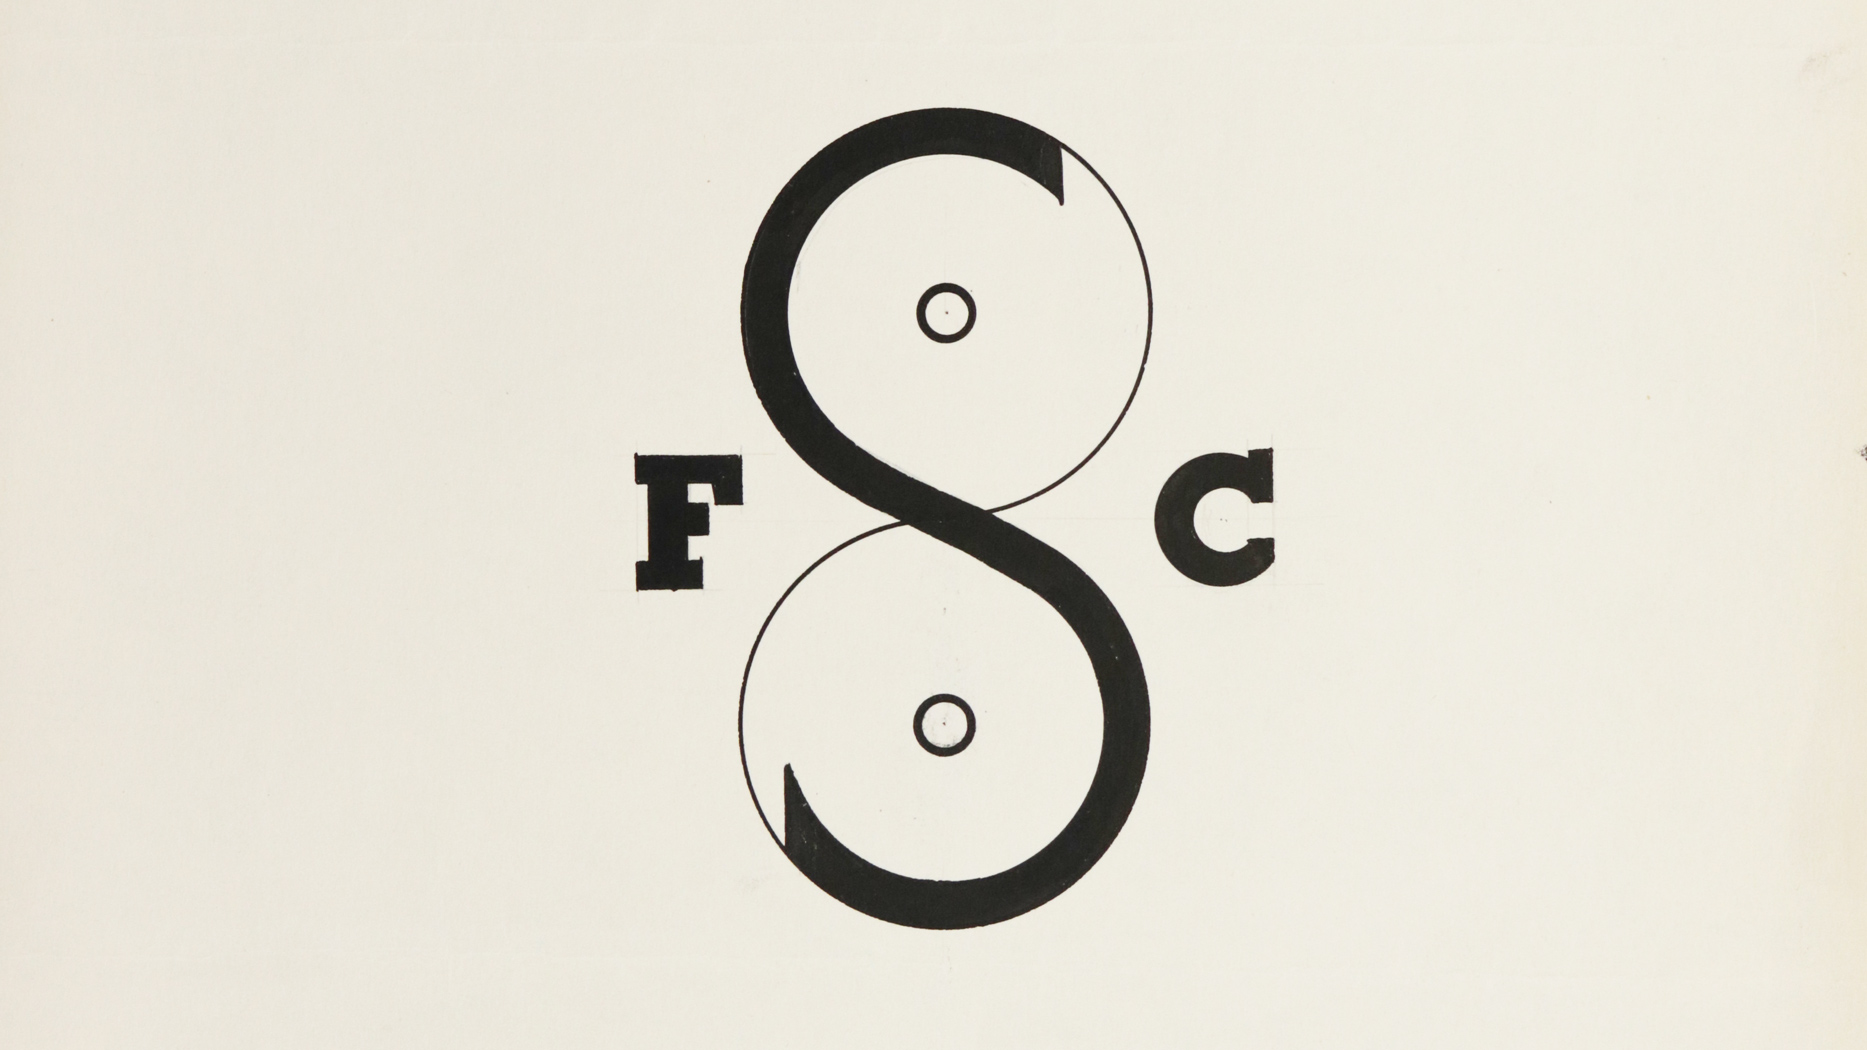 Original logo designed by György Kepes for the Film Study Center c. 1957, courtesy of the Kepes estate